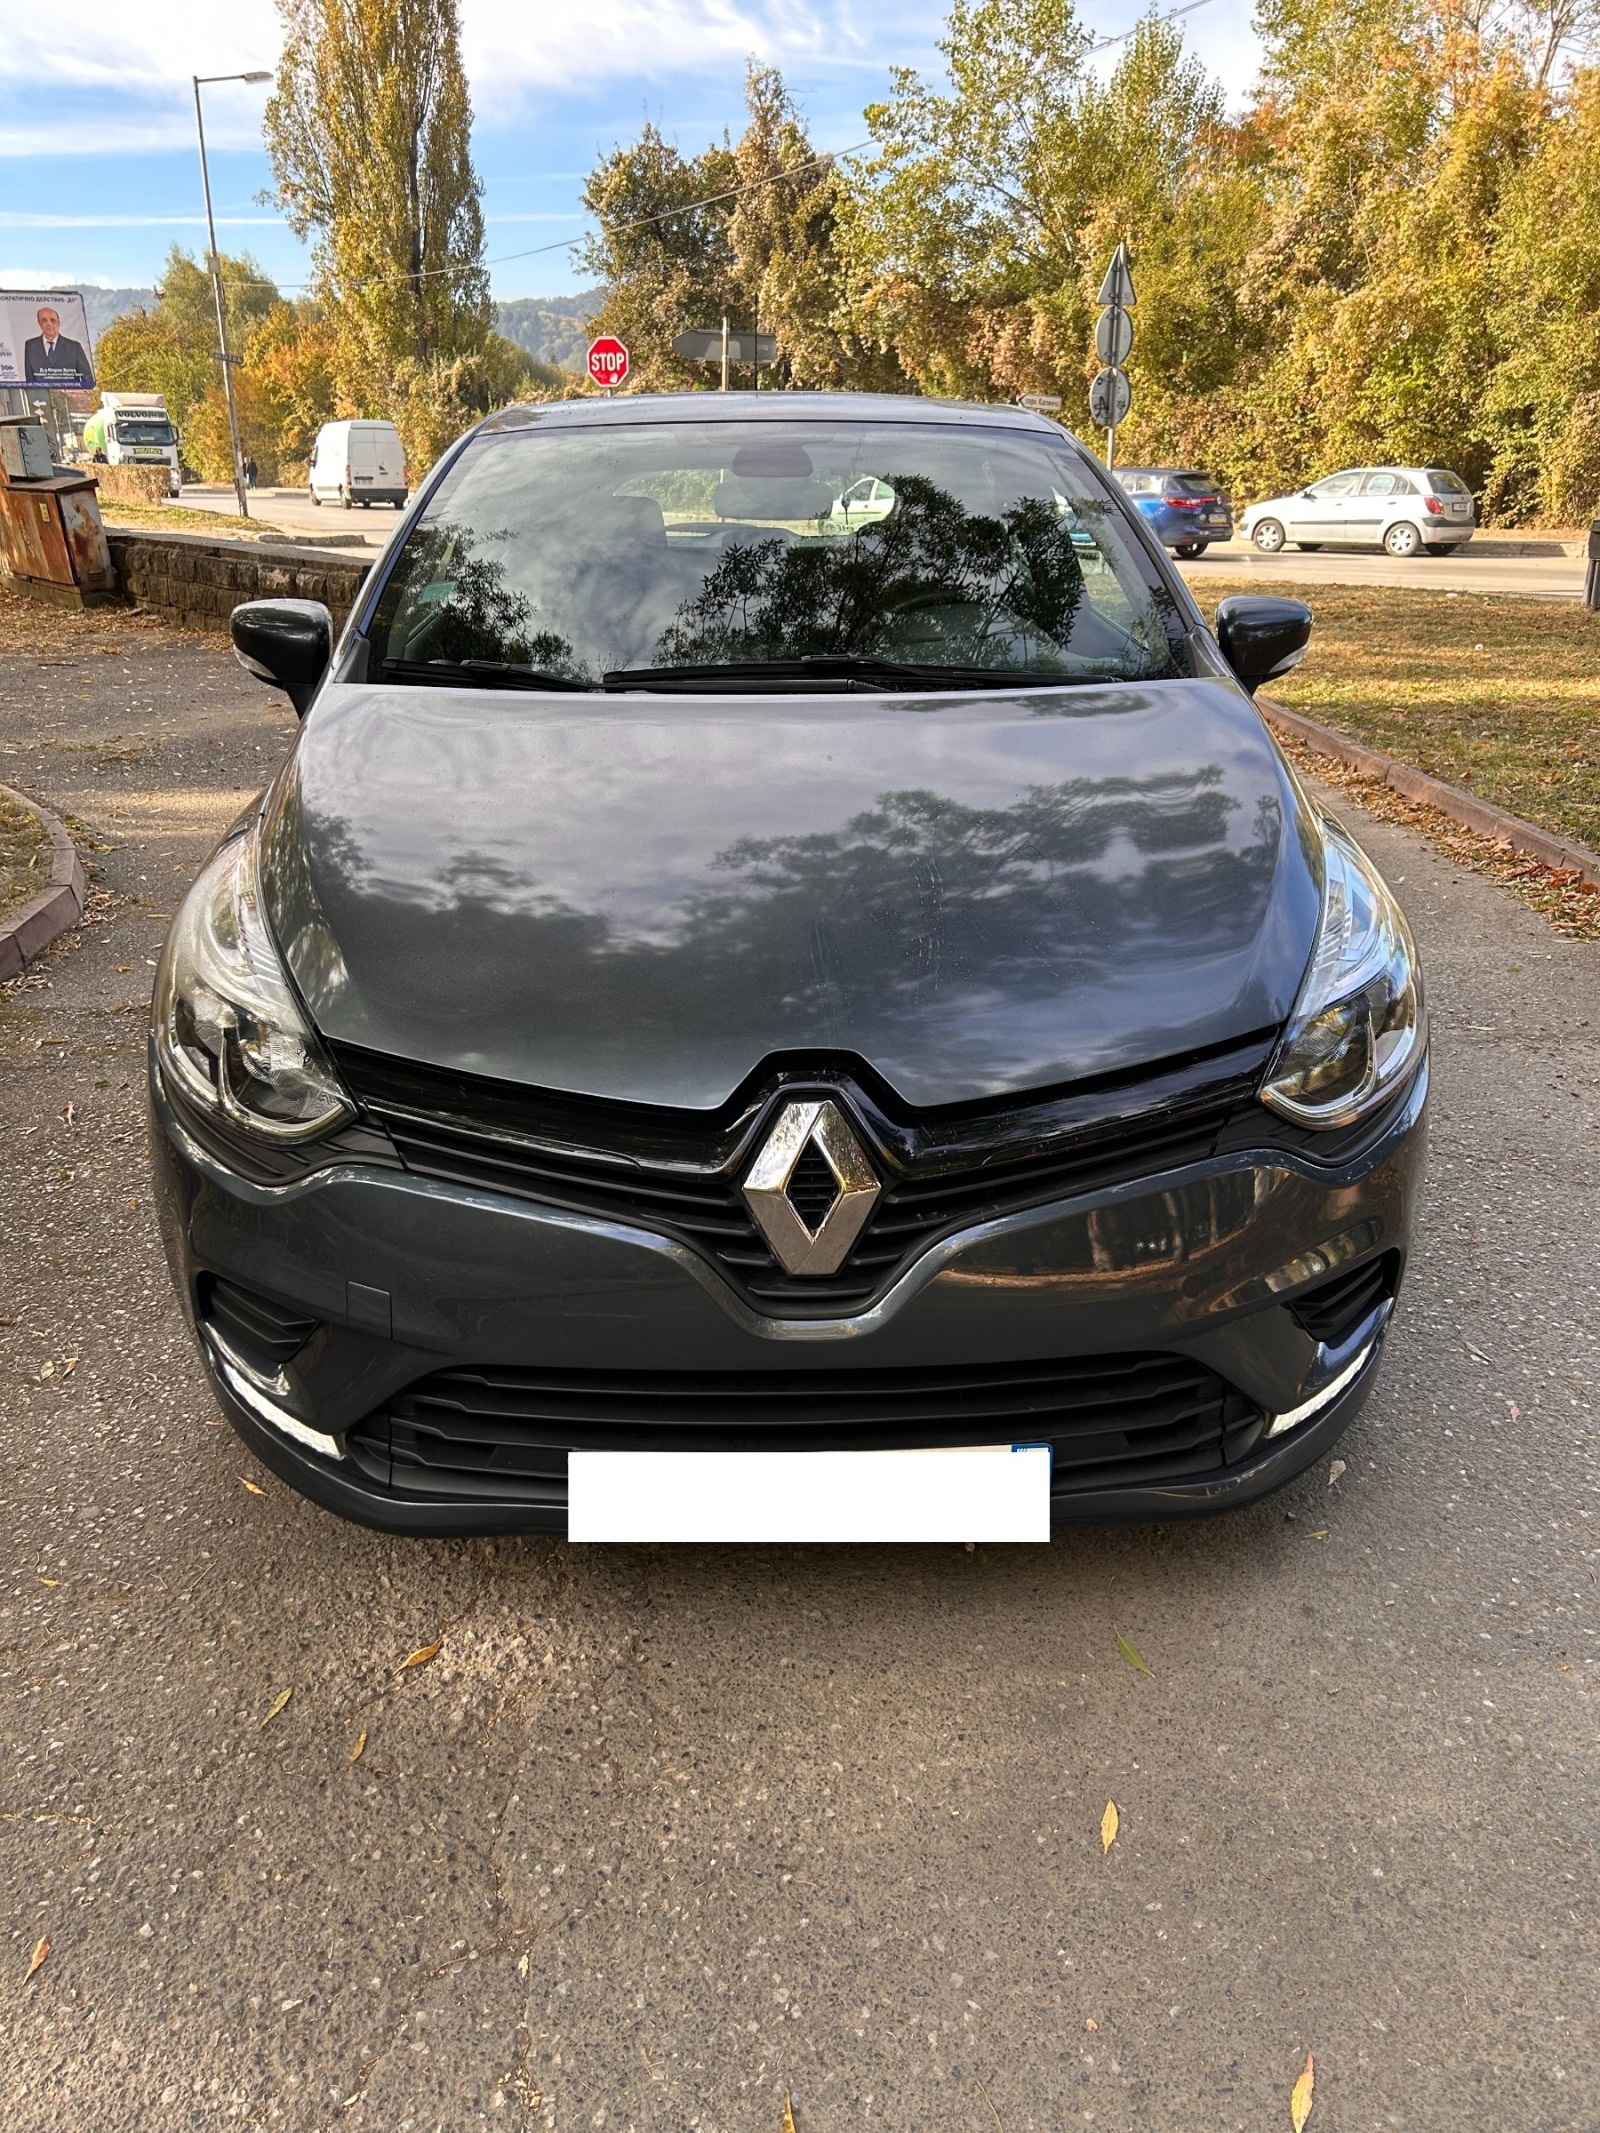 Renault Clio IV (Phase II) 0.9 tCe (75 ps) - изображение 1